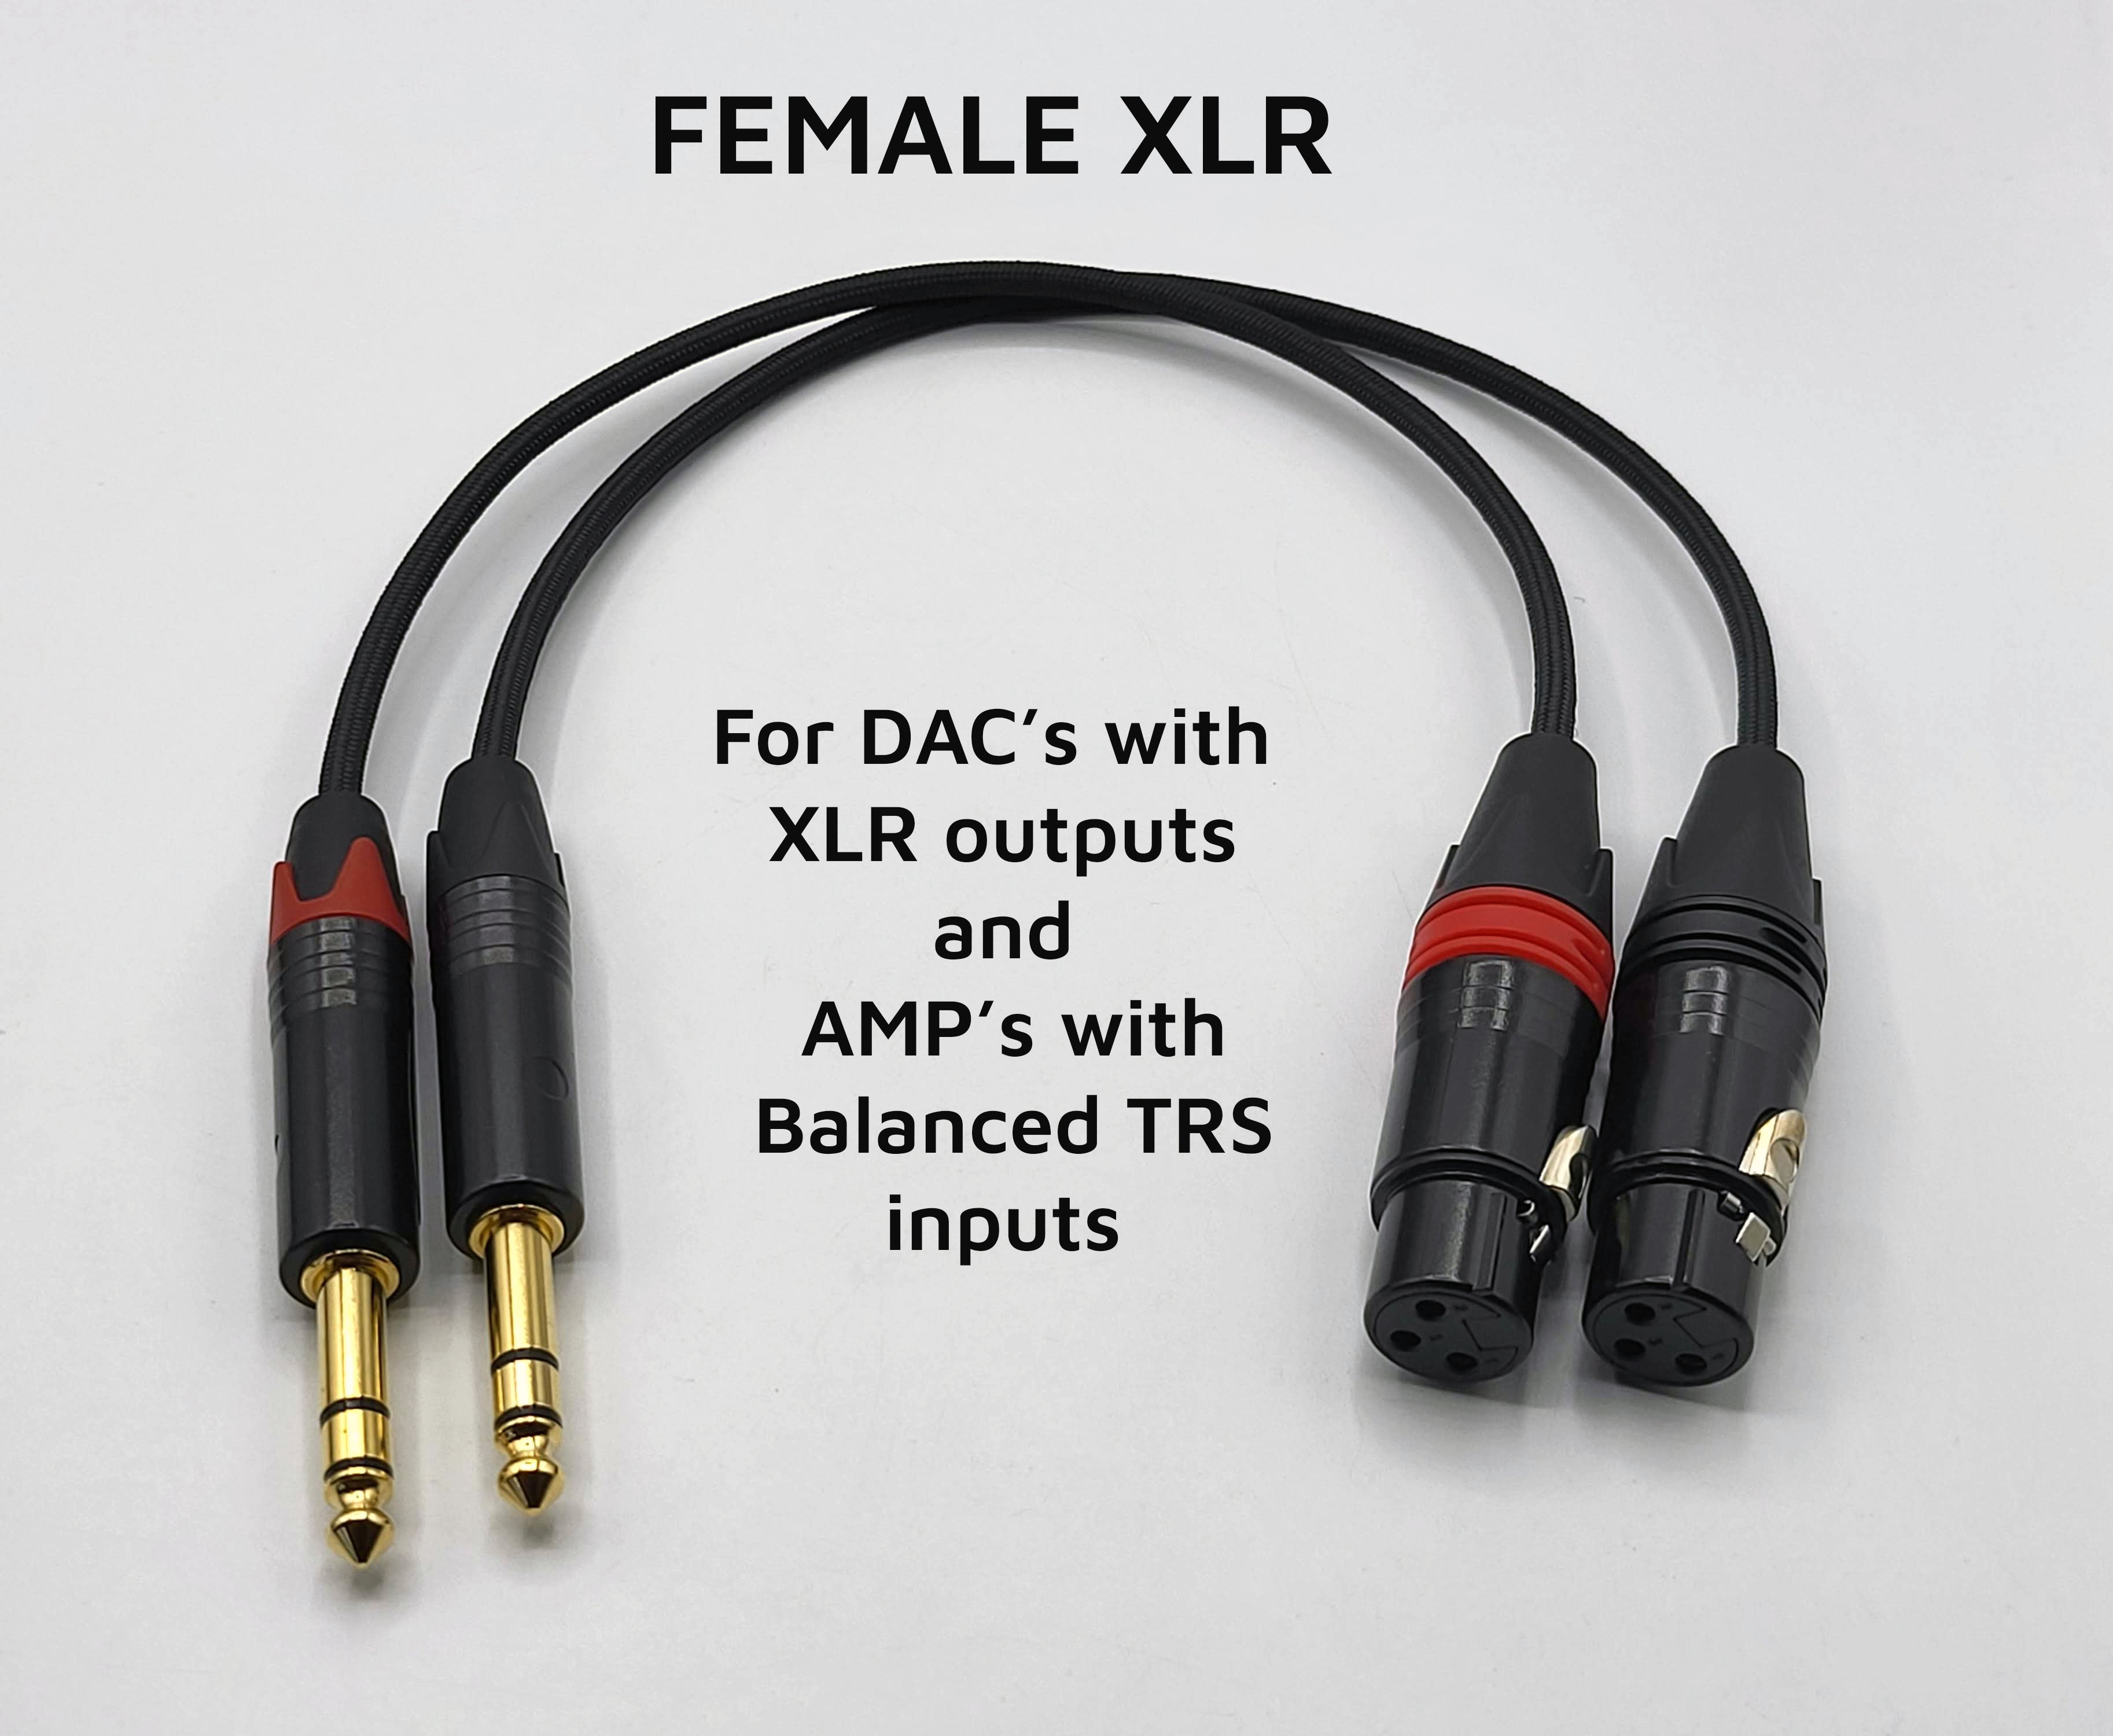 Pair of Balanced TRS to 3 Pin XLR Cables - Male XLR (D10 DAC) or Female XLR (JDS Labs El Amp II+ Balanced)